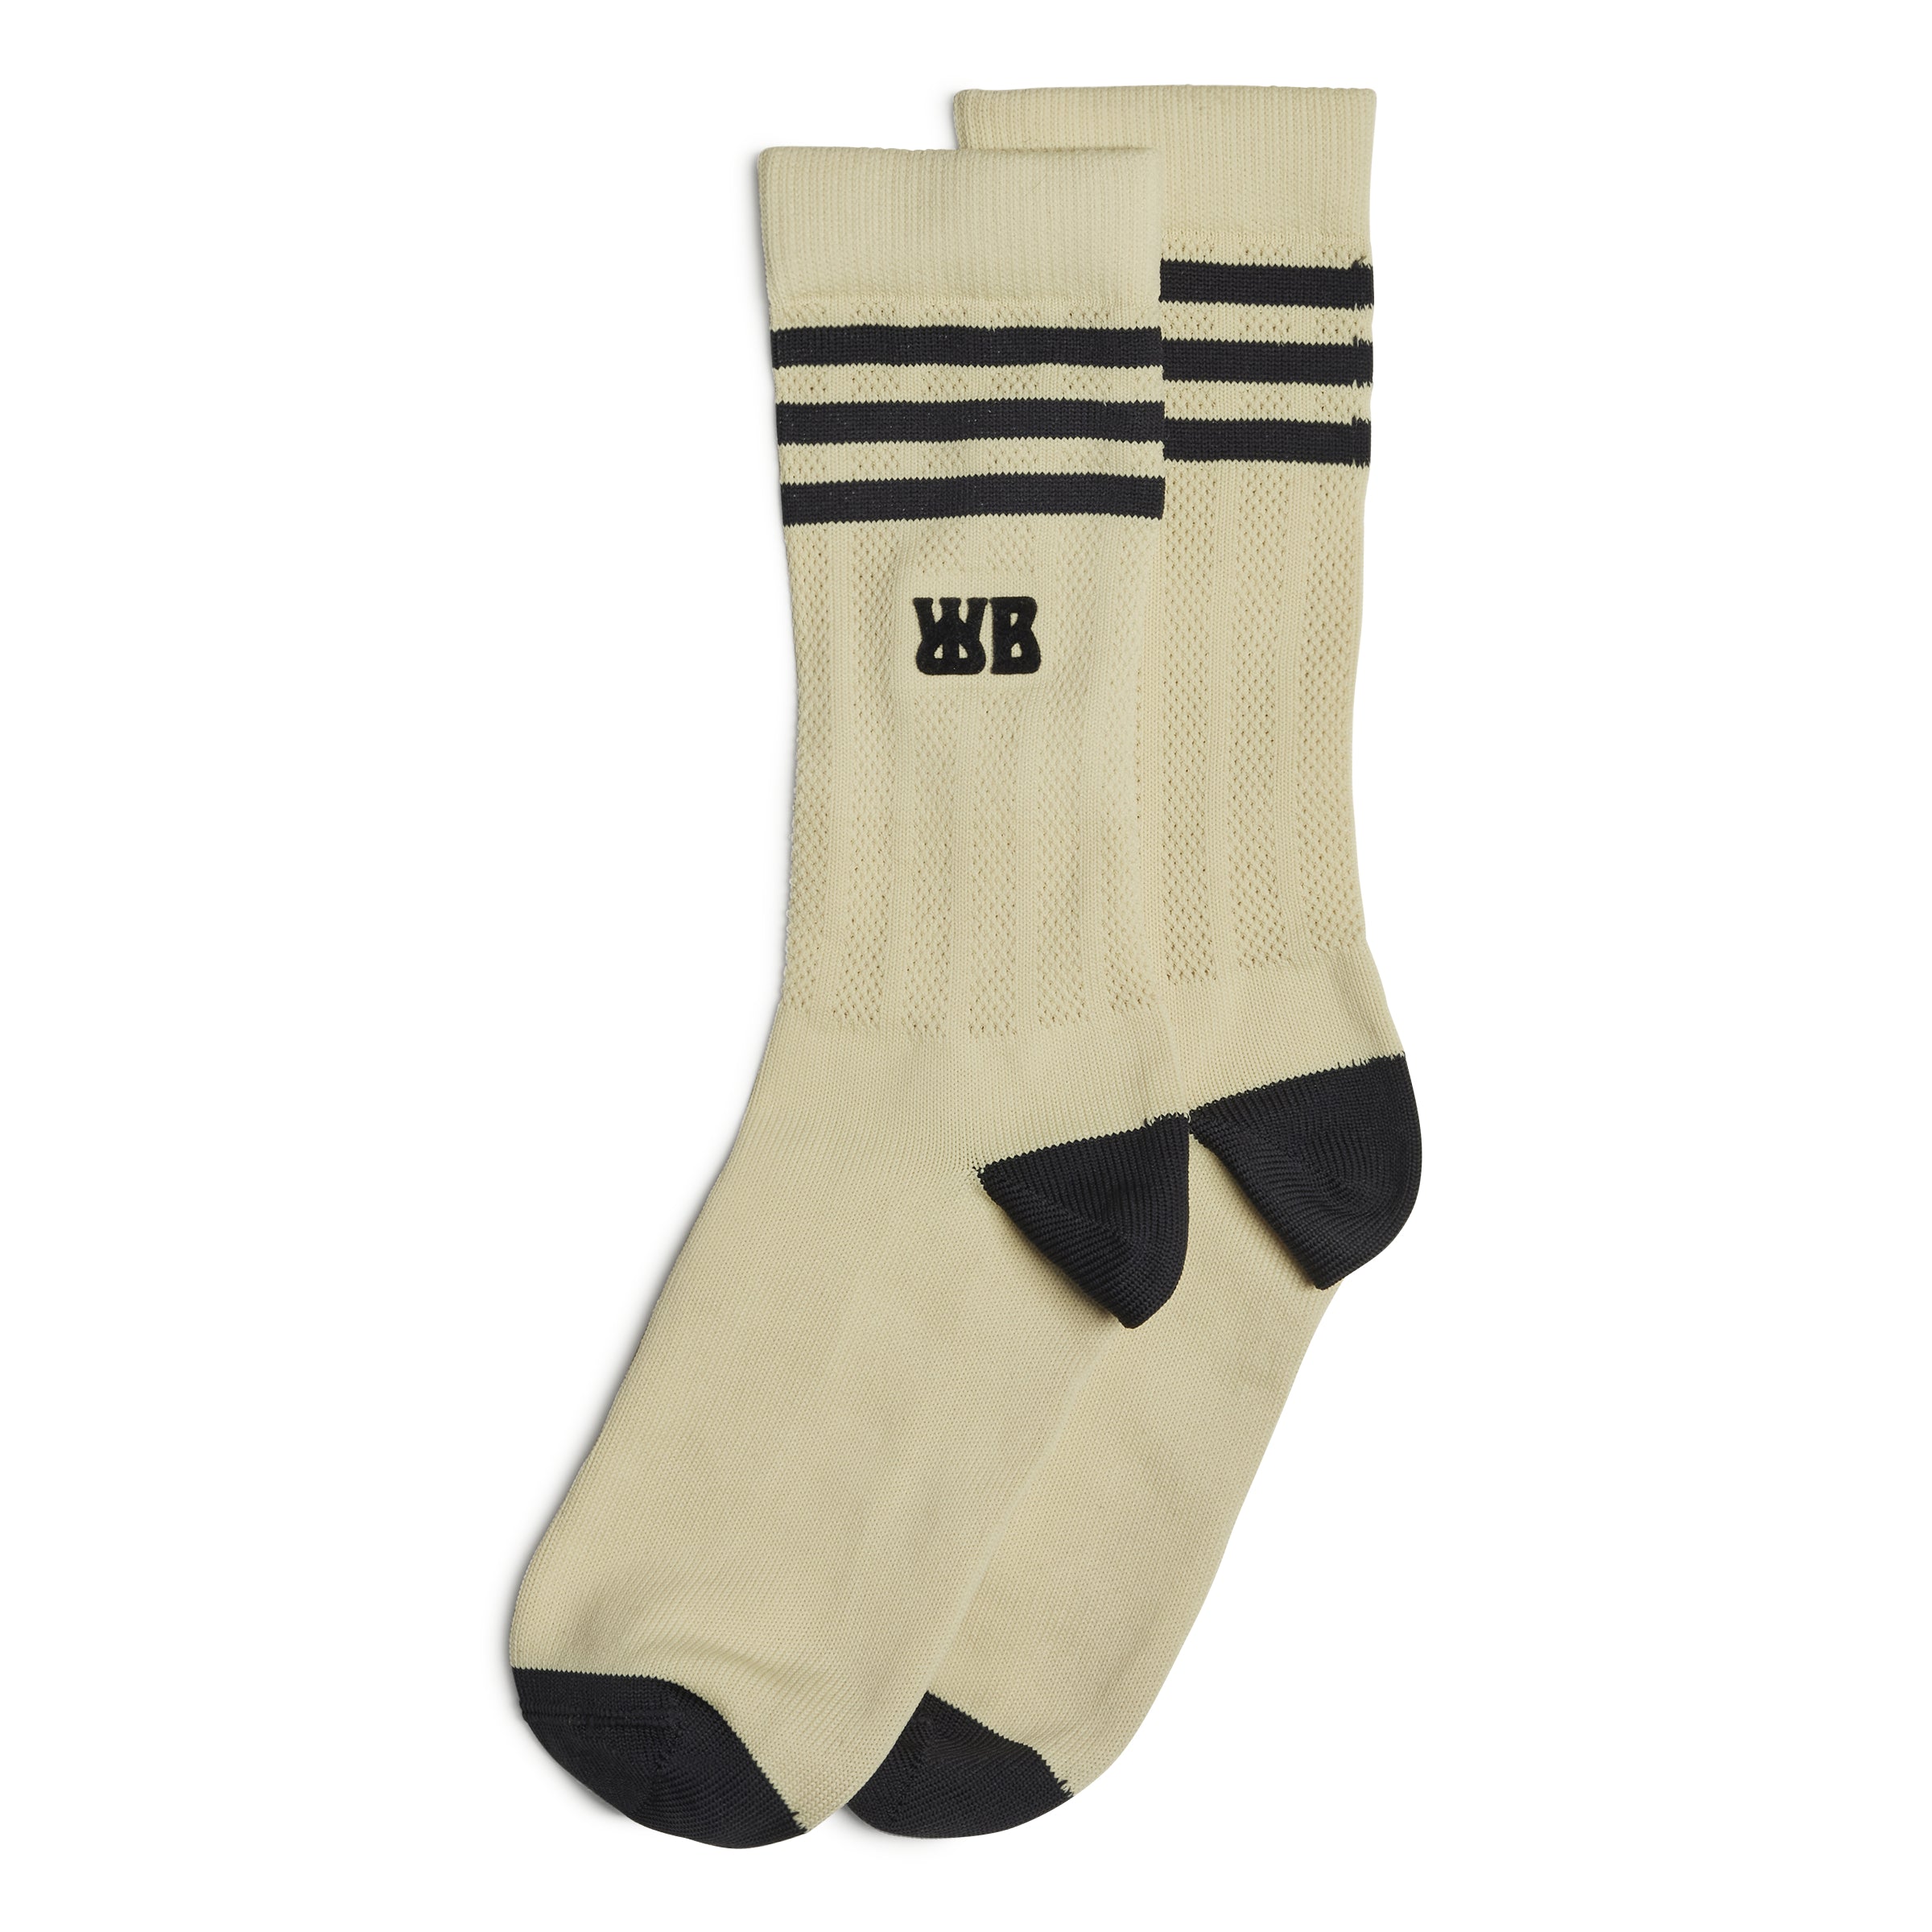 adidas x wales bonner socks (sandy beige / black) - in0660 - a.plus